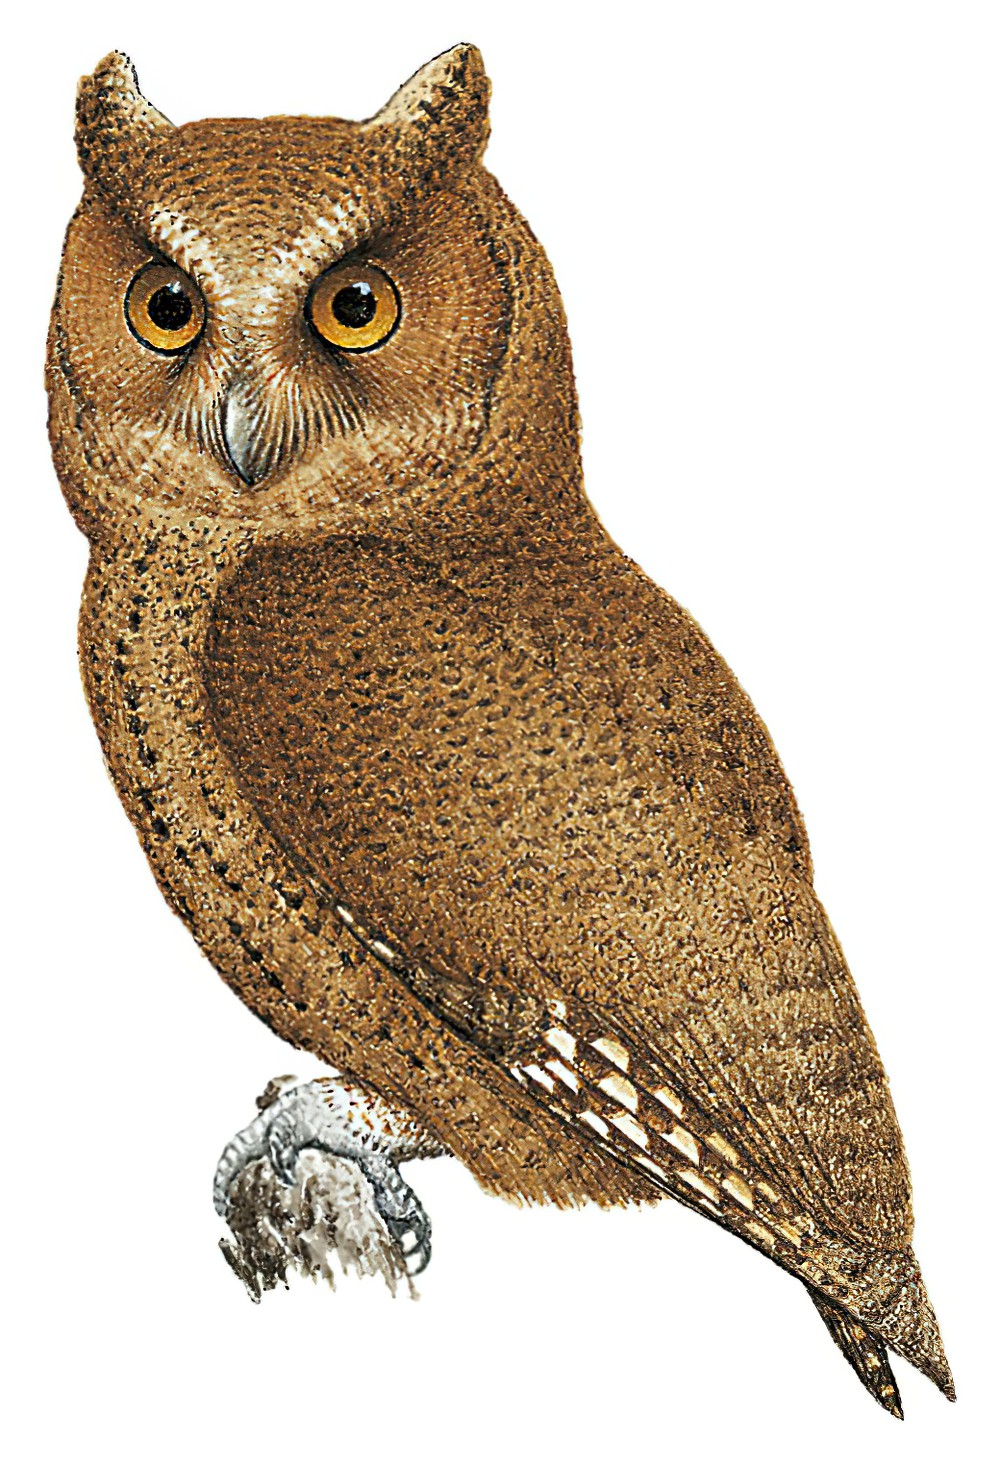 Palawan Scops-Owl / Otus fuliginosus